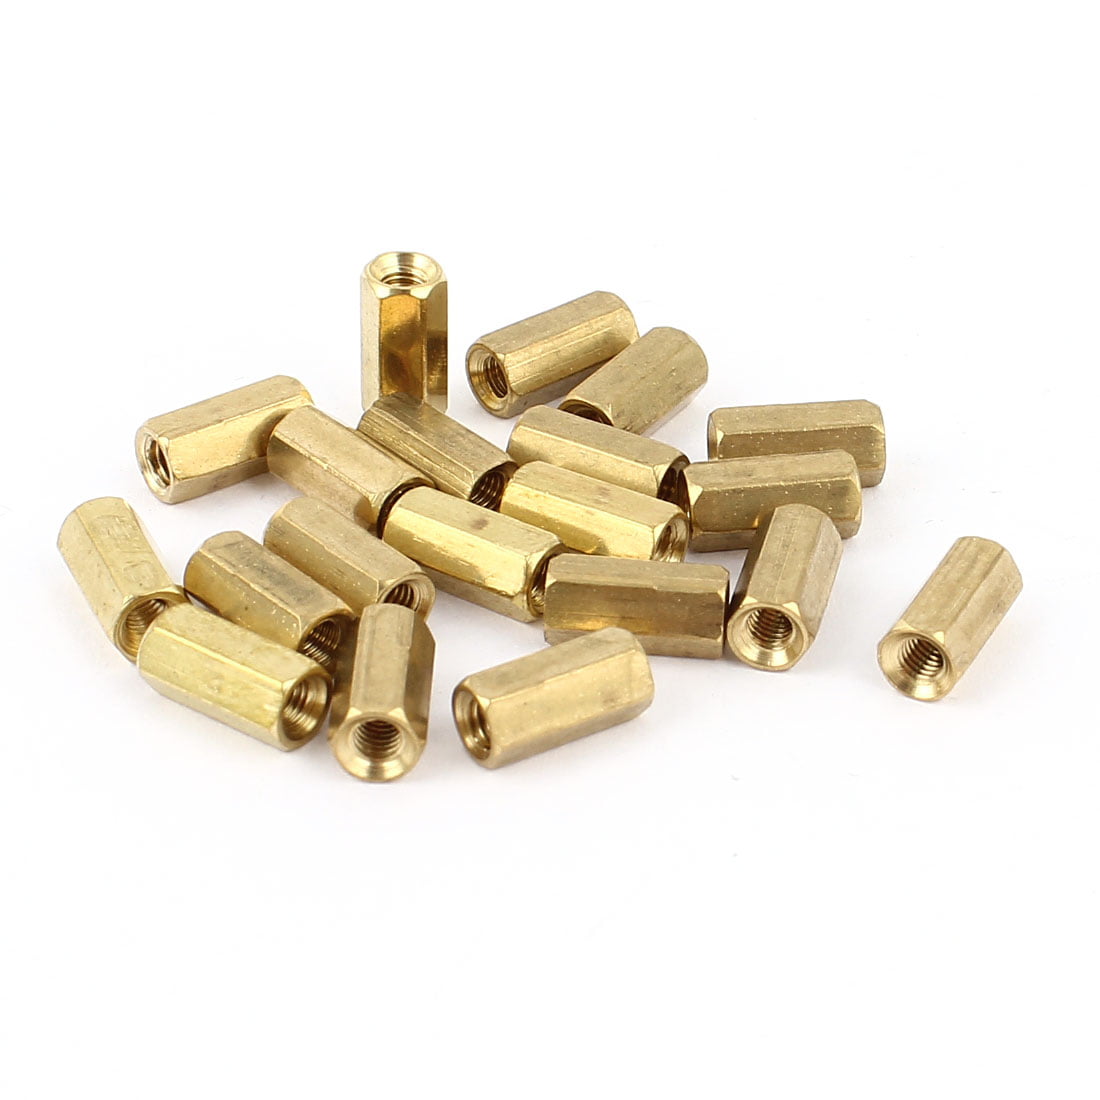 20pcs M3 12 mm Hexagonal net nut Female brass Standoff/Spacer New Good Quality 